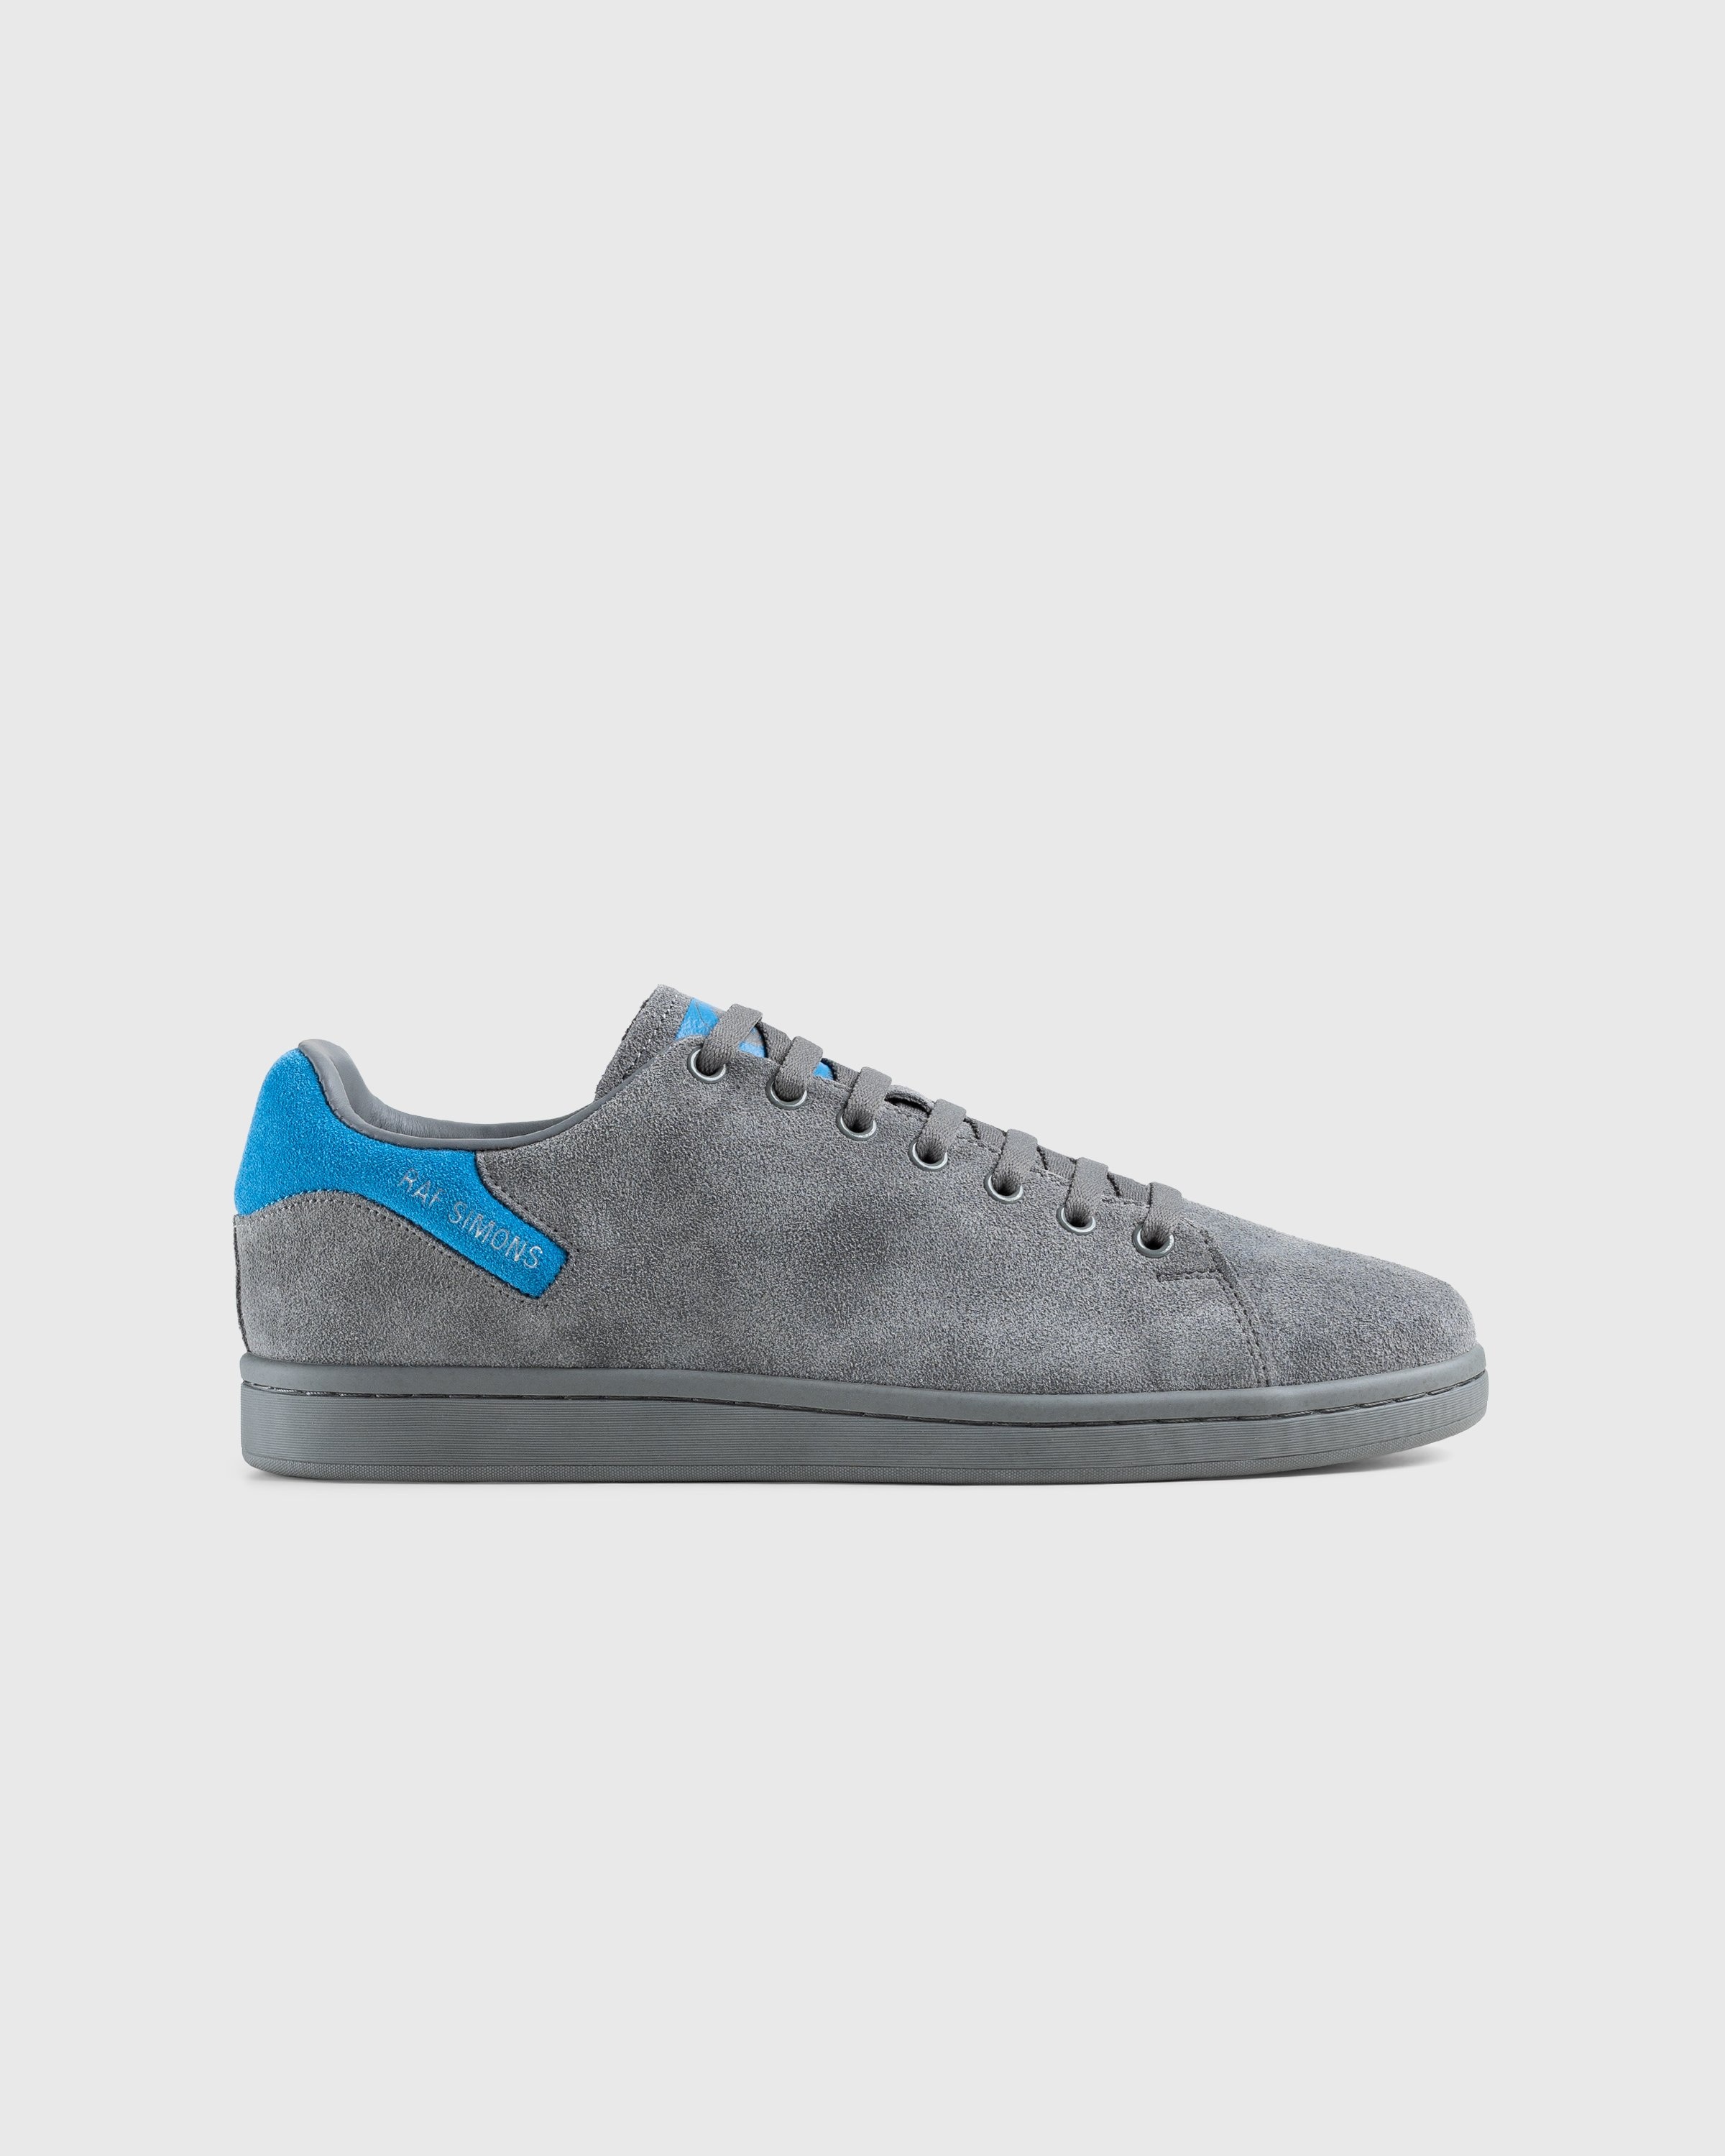 Raf Simons – Orion Grey - Sneakers - Grey - Image 1